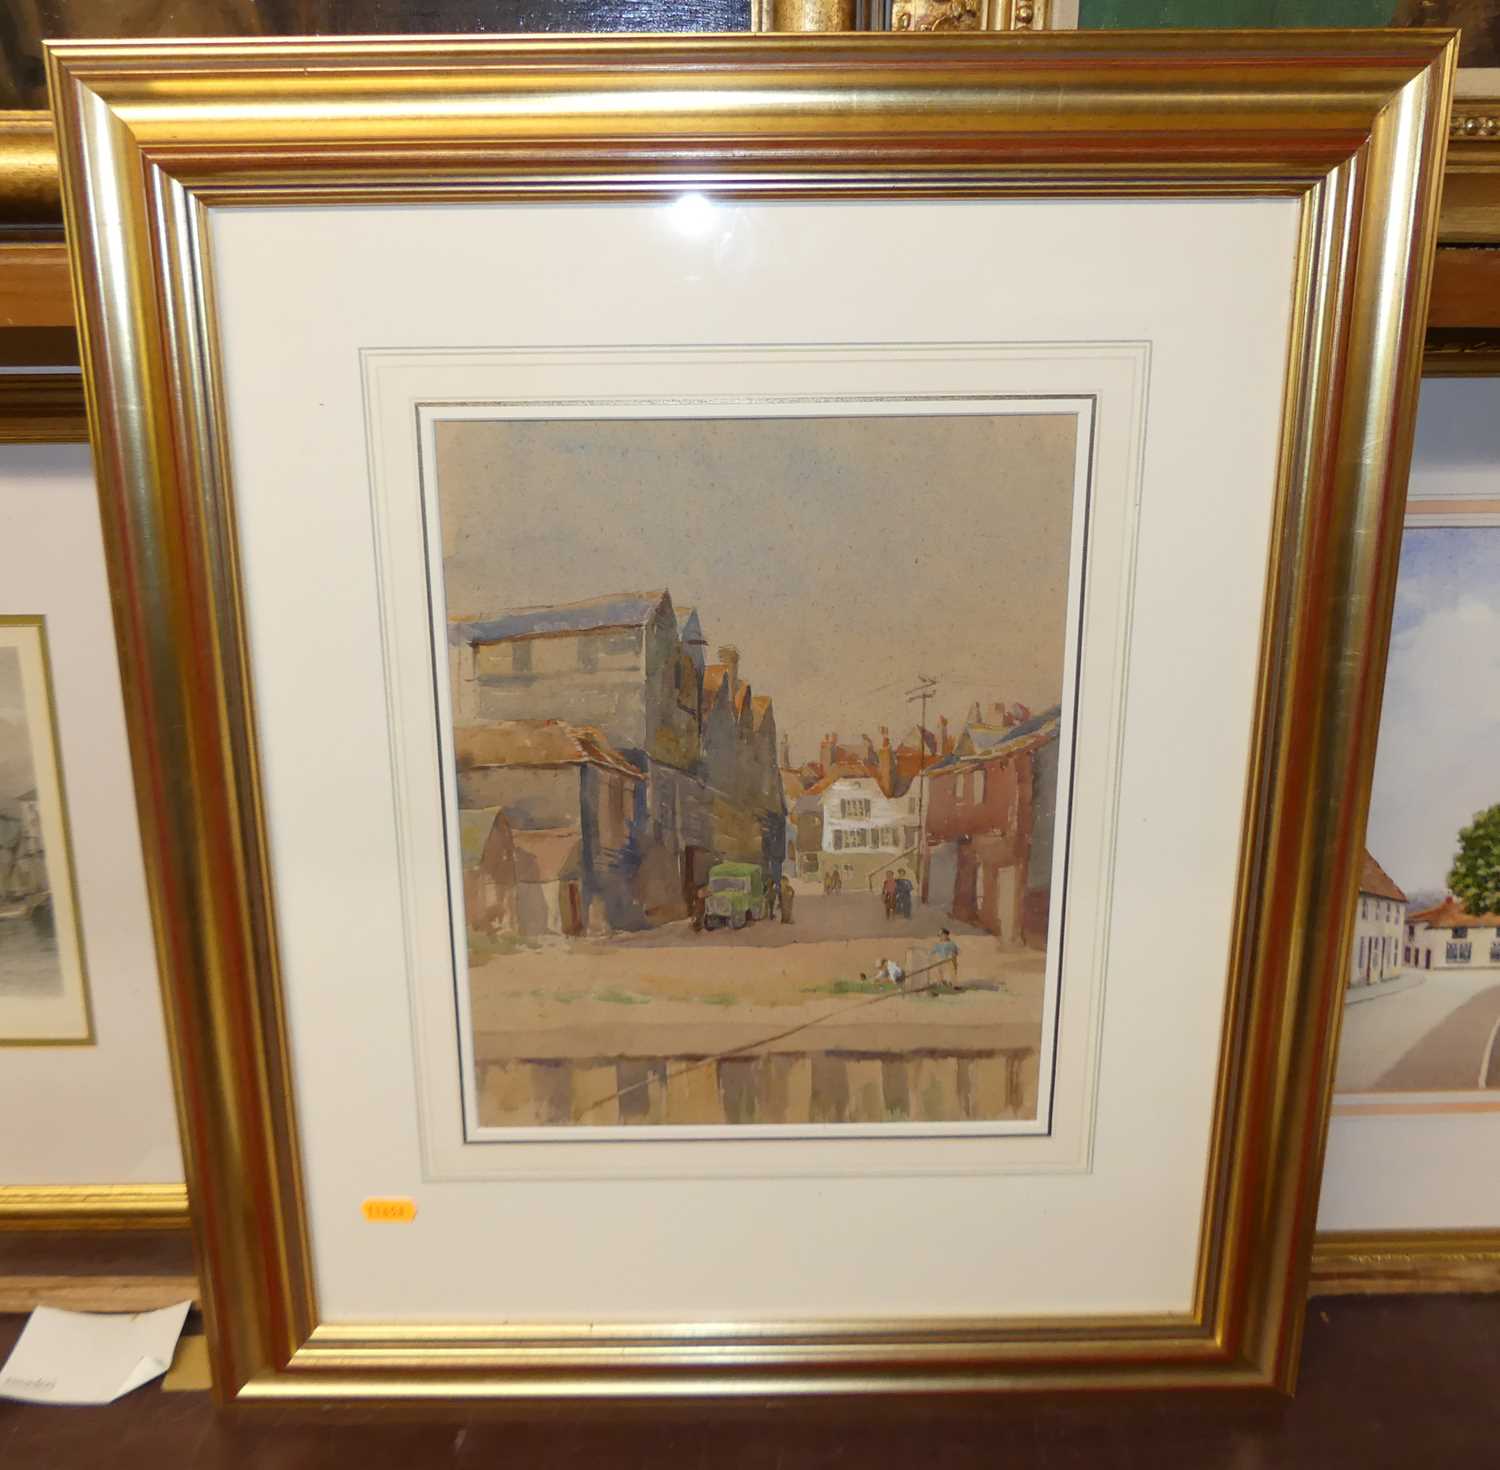 Nancey McClennan - The Mill Stream, watercolour, signed lower right, 32 x 22.5cm; Jean Douglas -